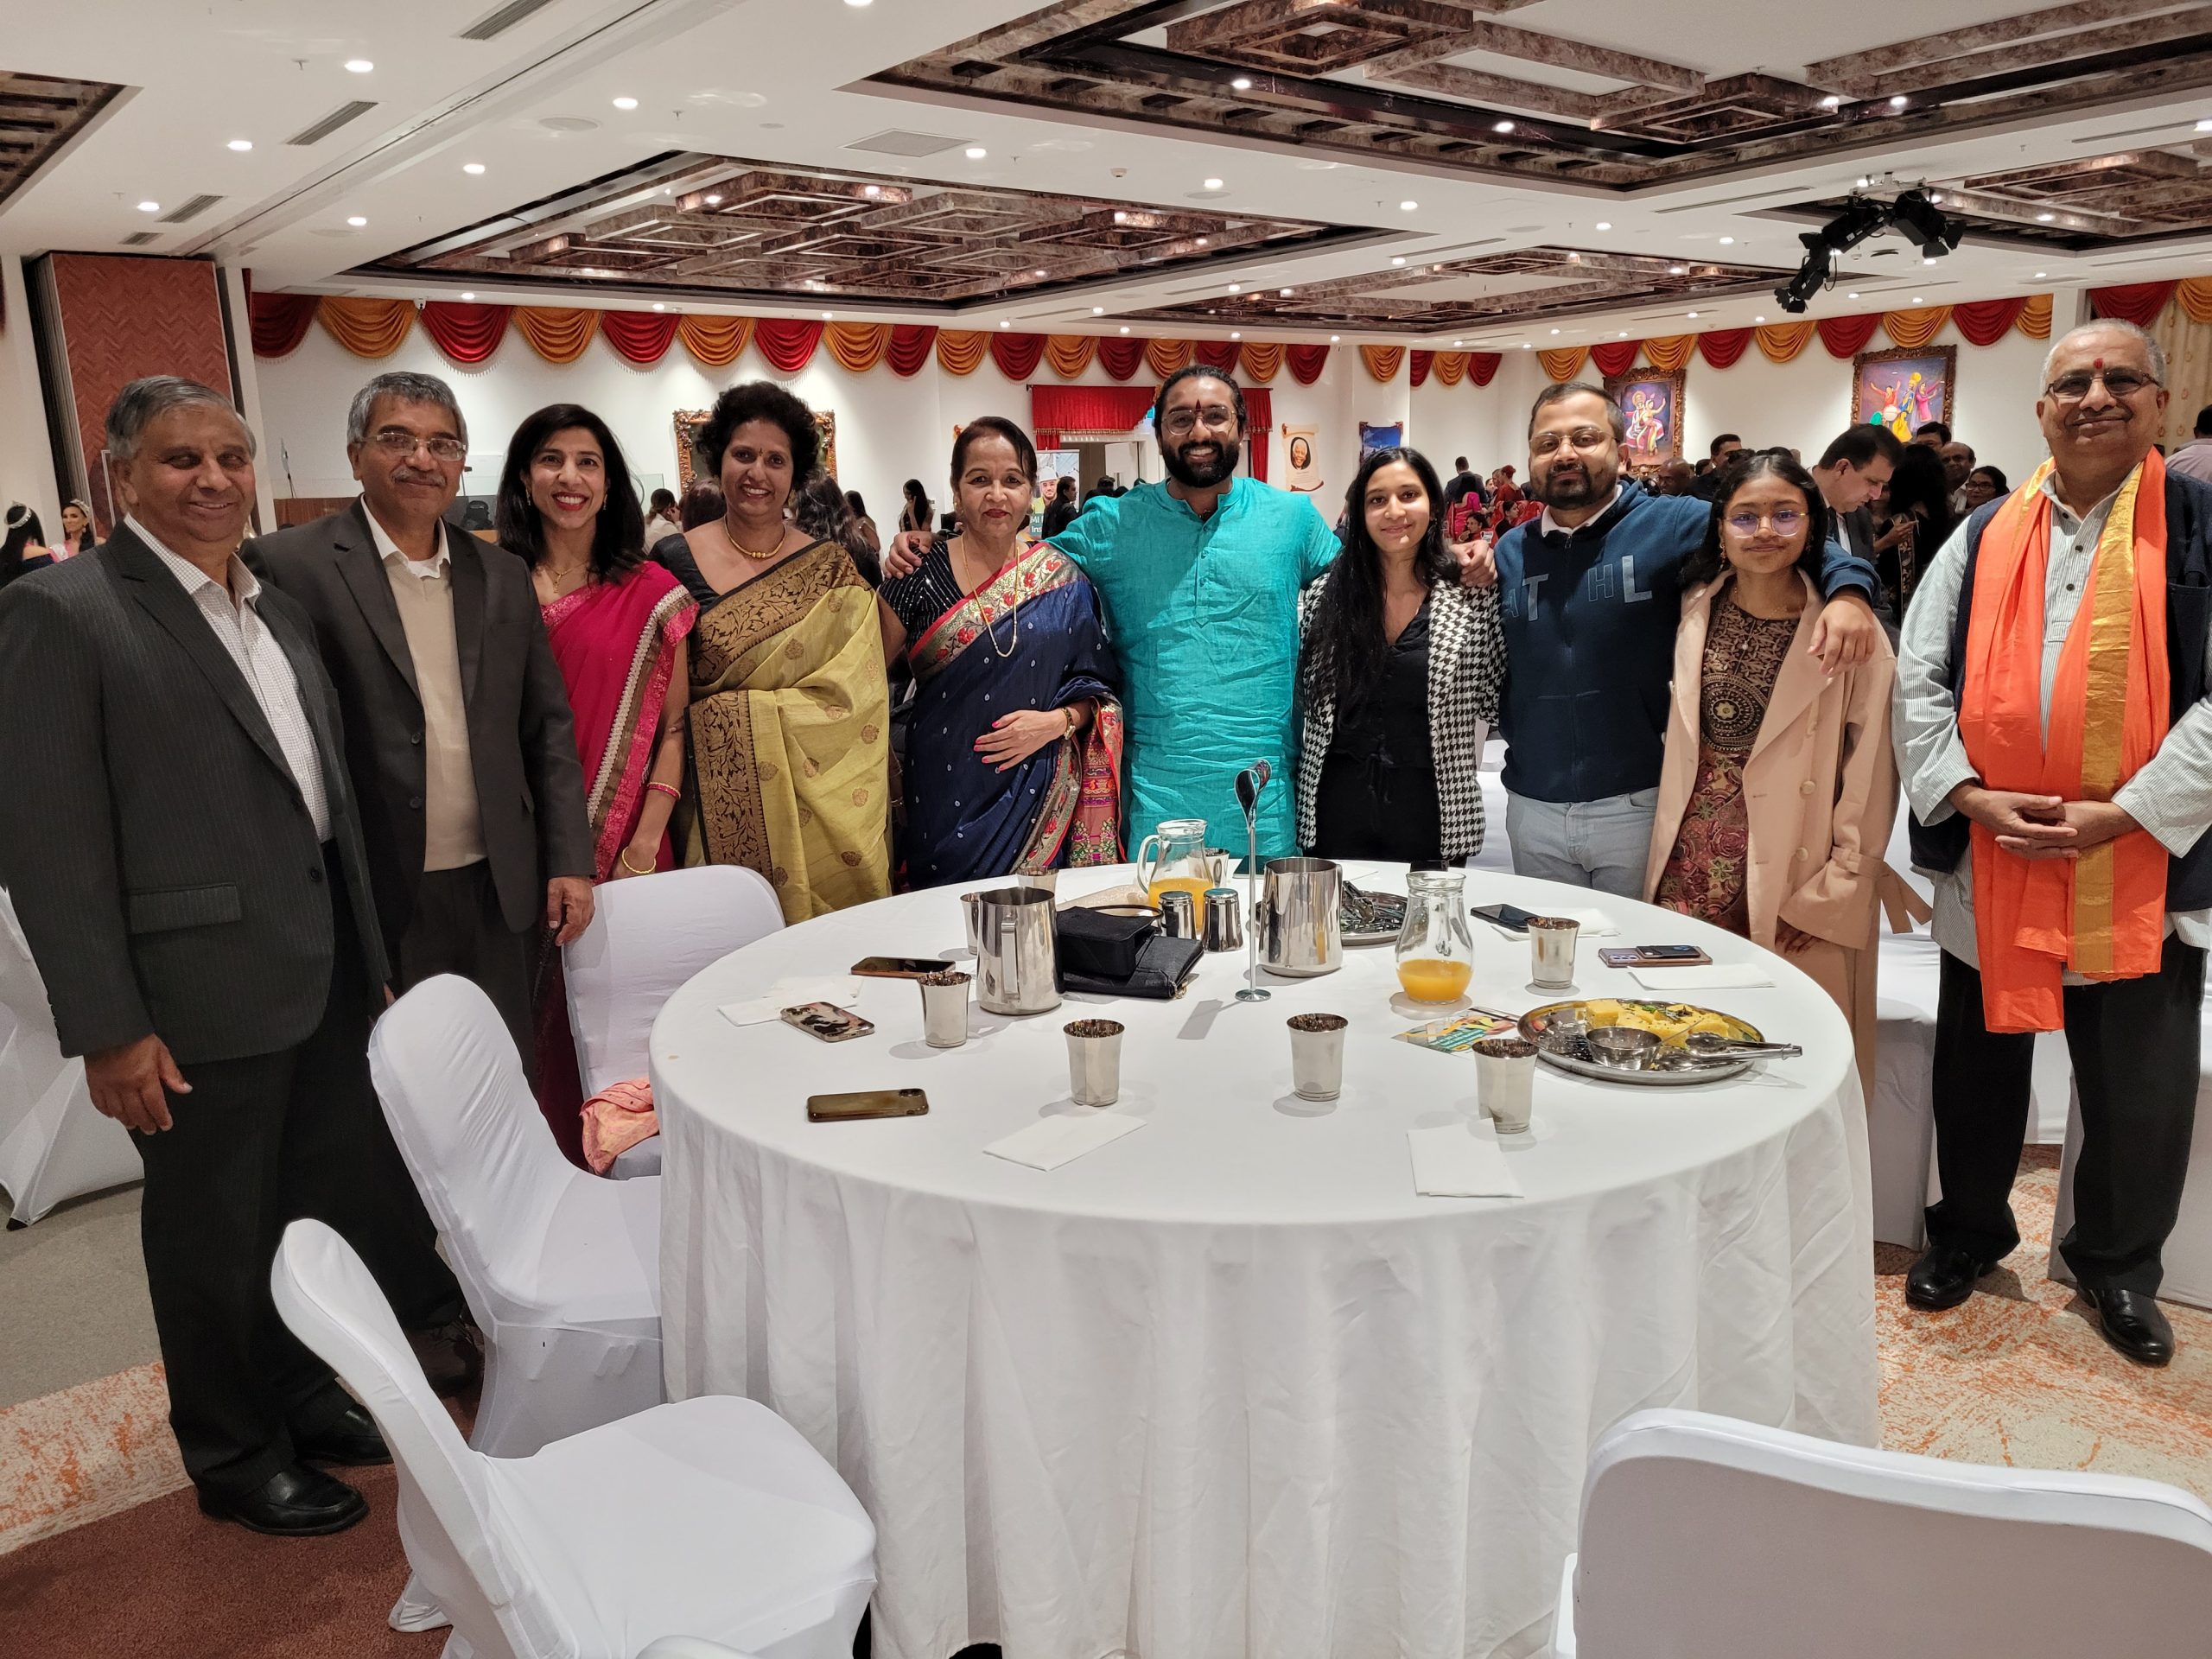 Contribution of New Zealand’s Hindu Community Recognised at Prestigious Awards Night